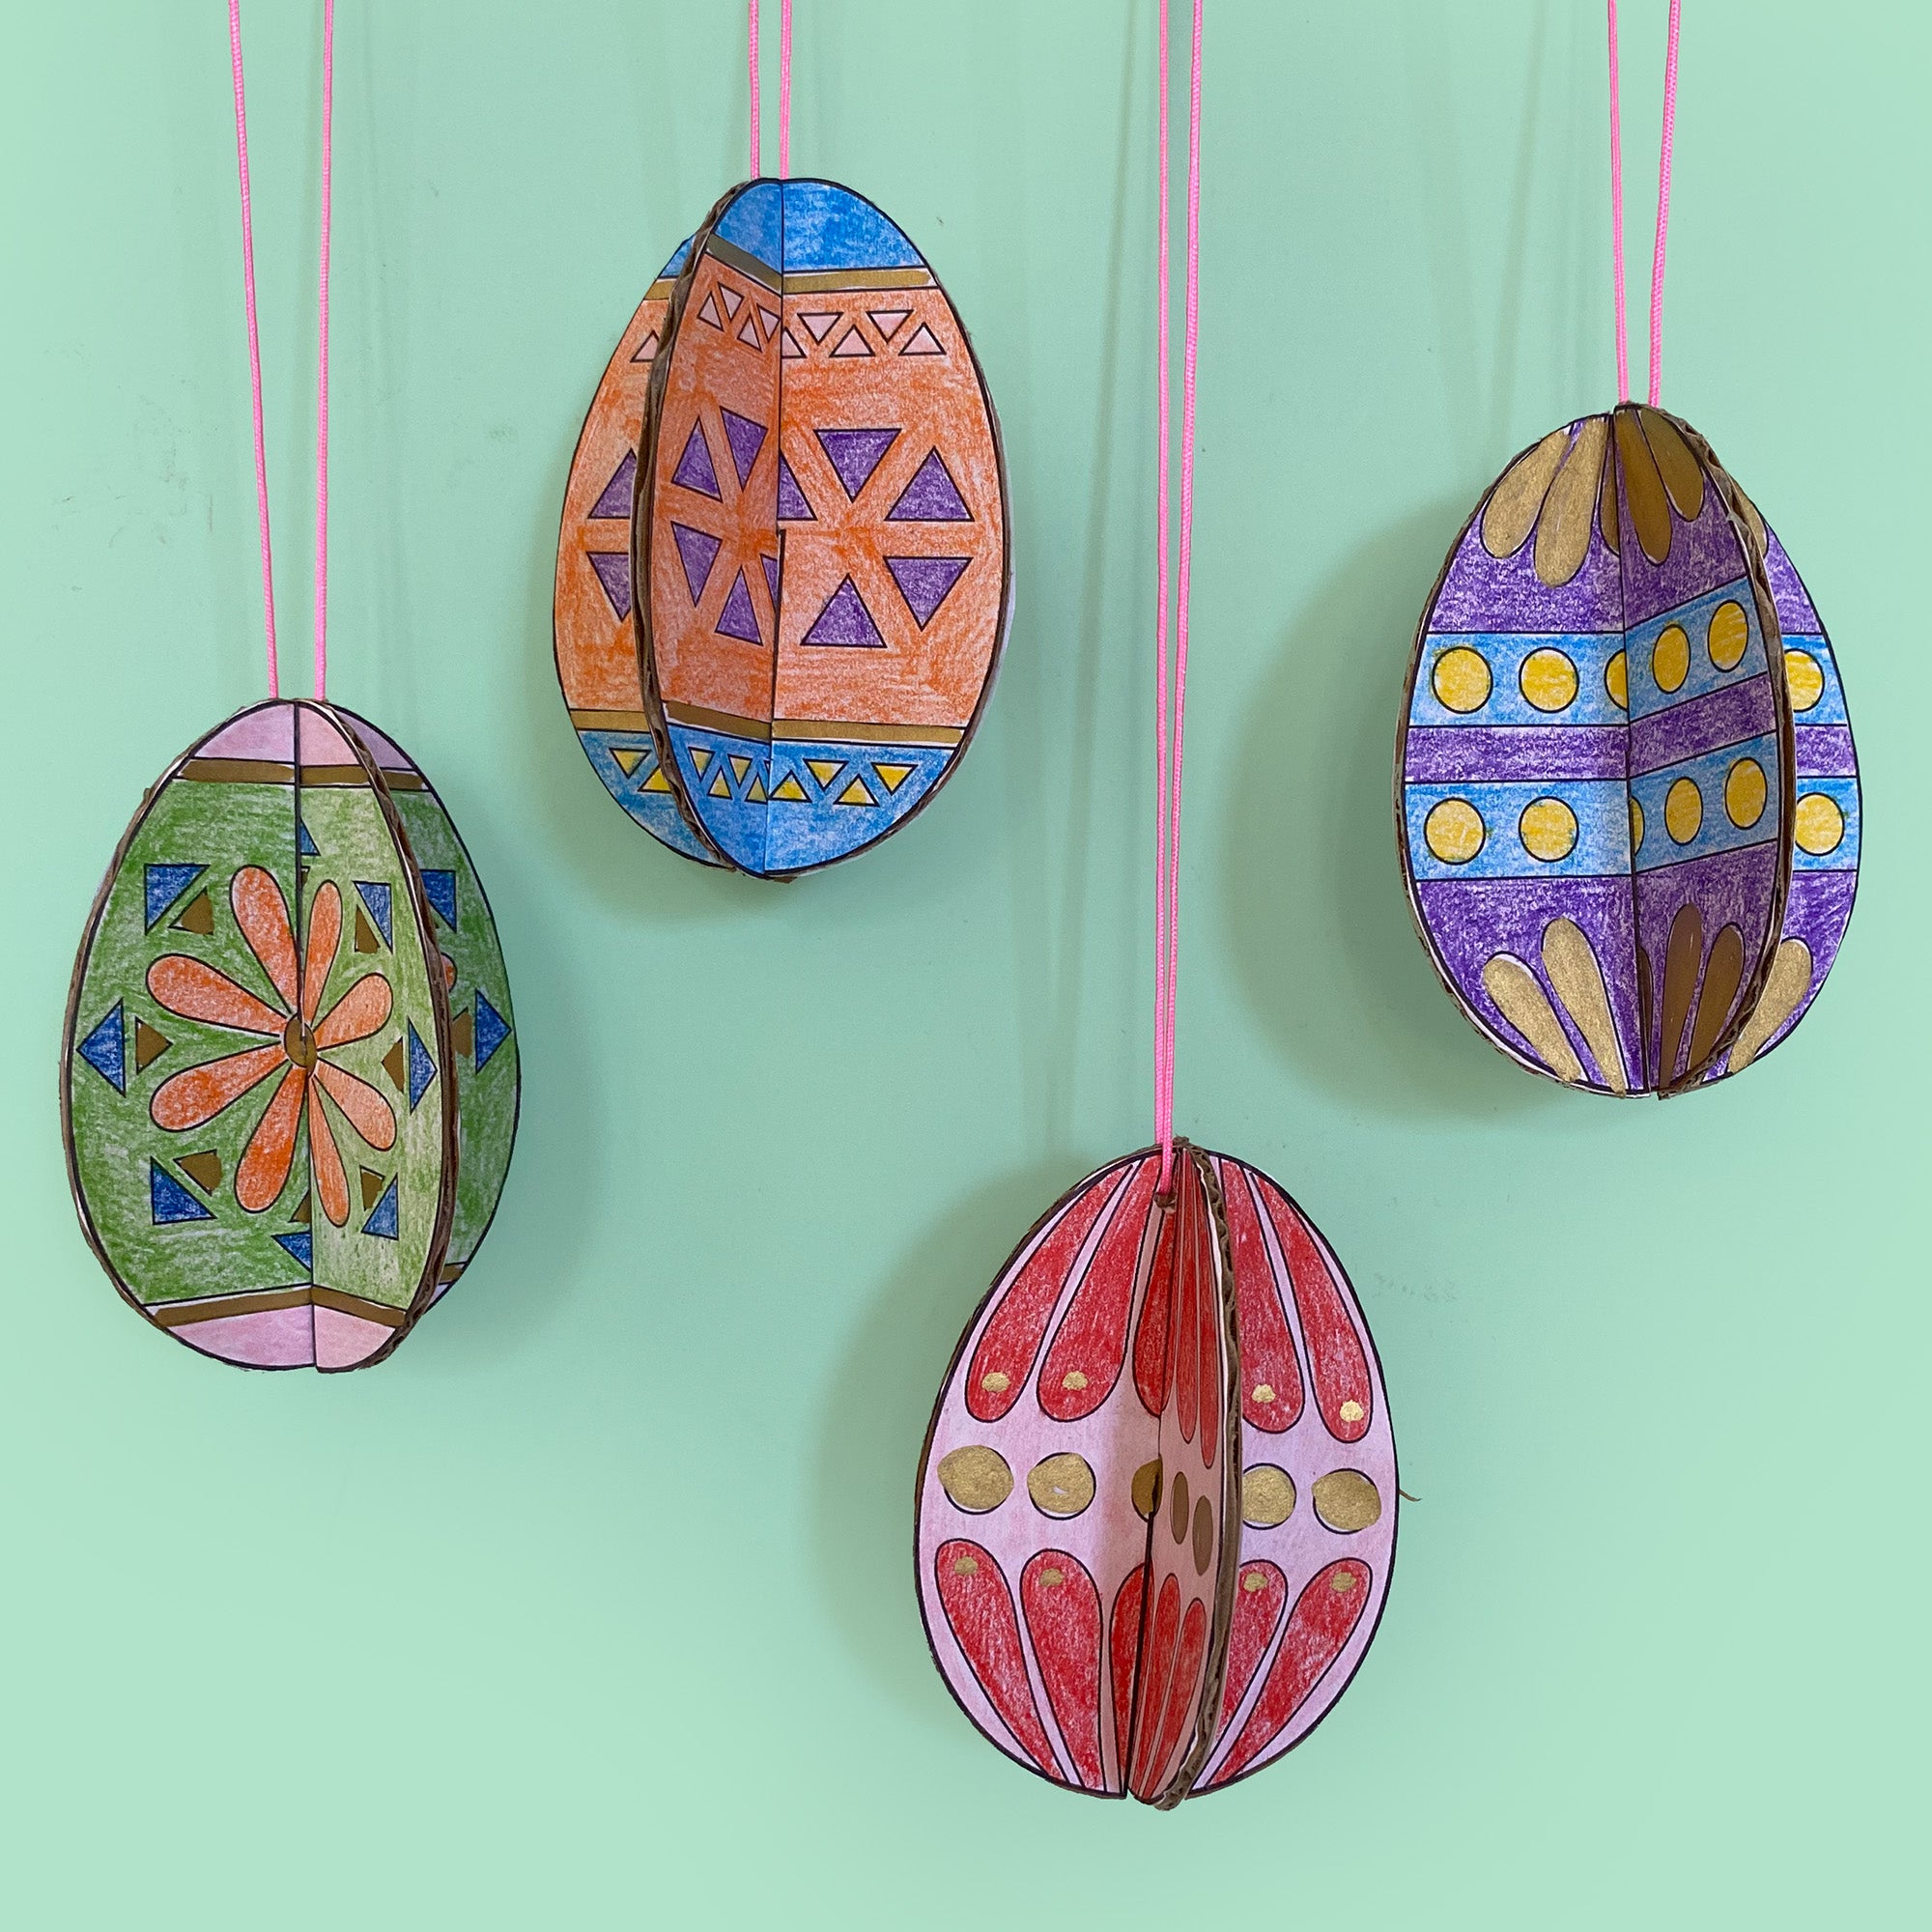 Easter crafts - Printable activity bundle